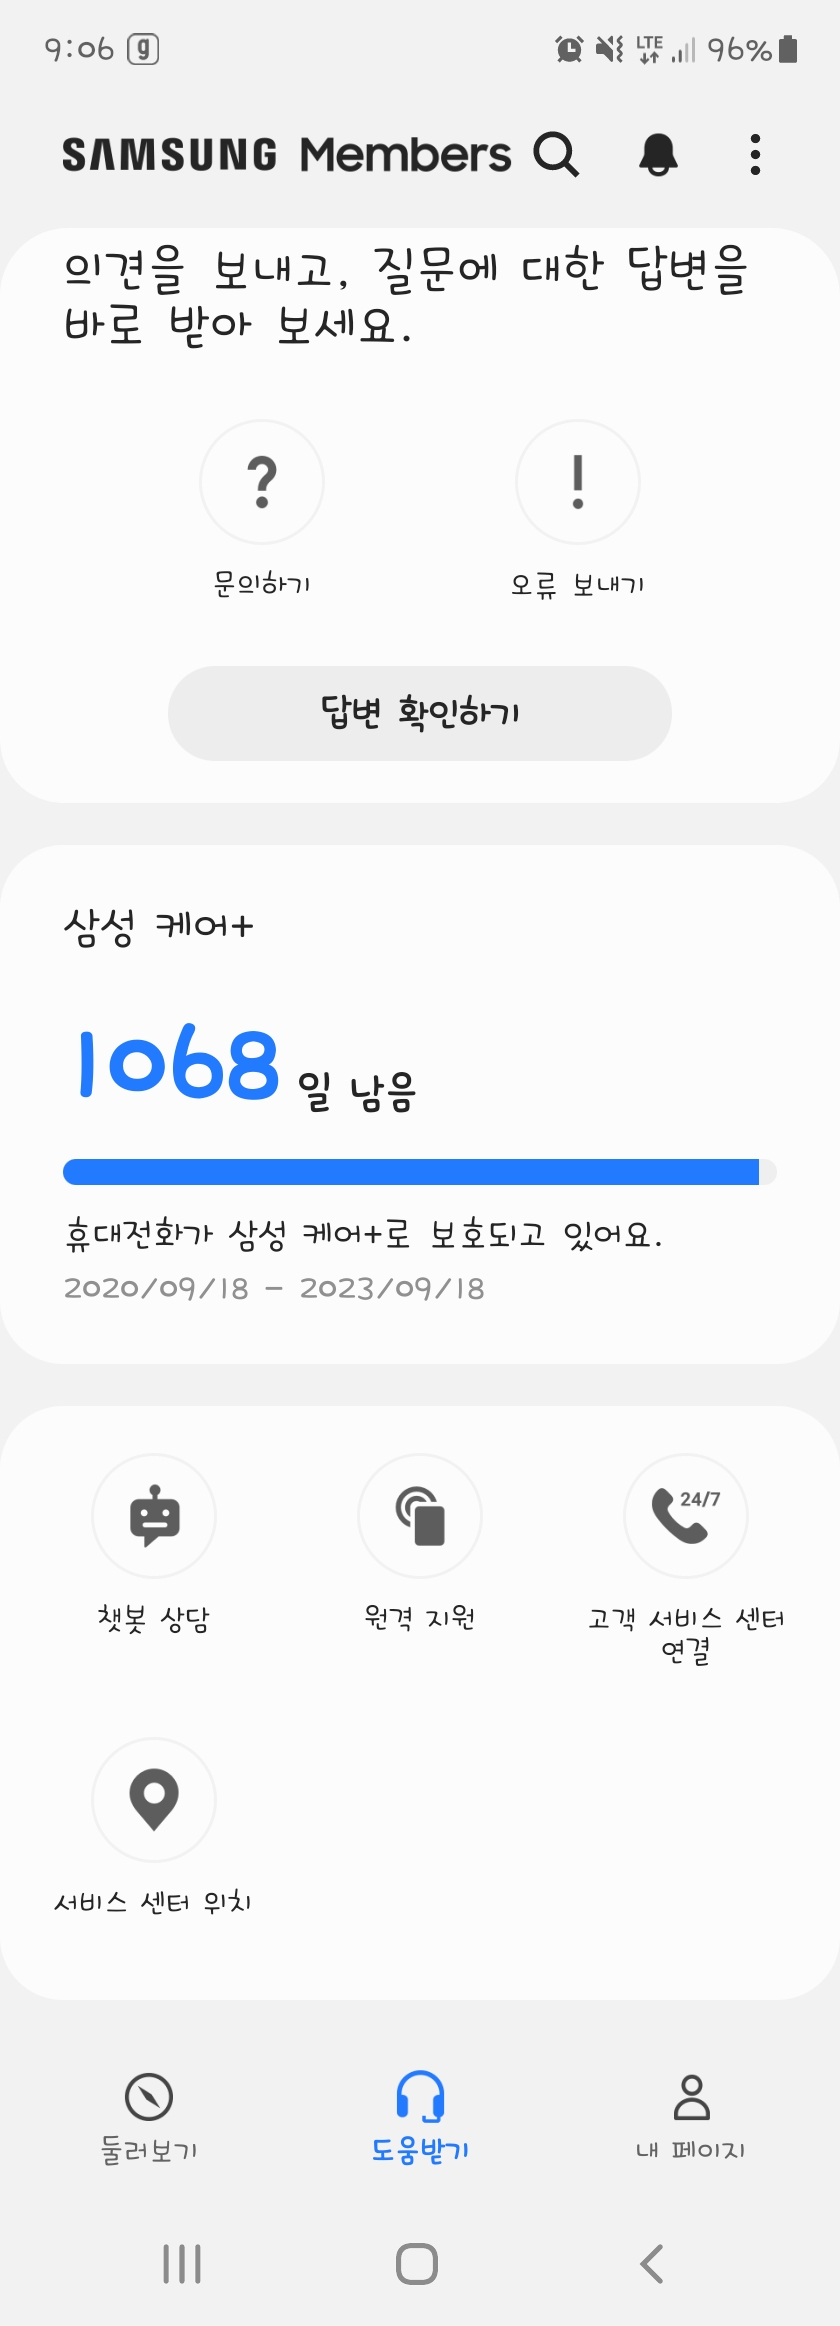 Screenshot_20201015-090654_Samsung Members.jpg